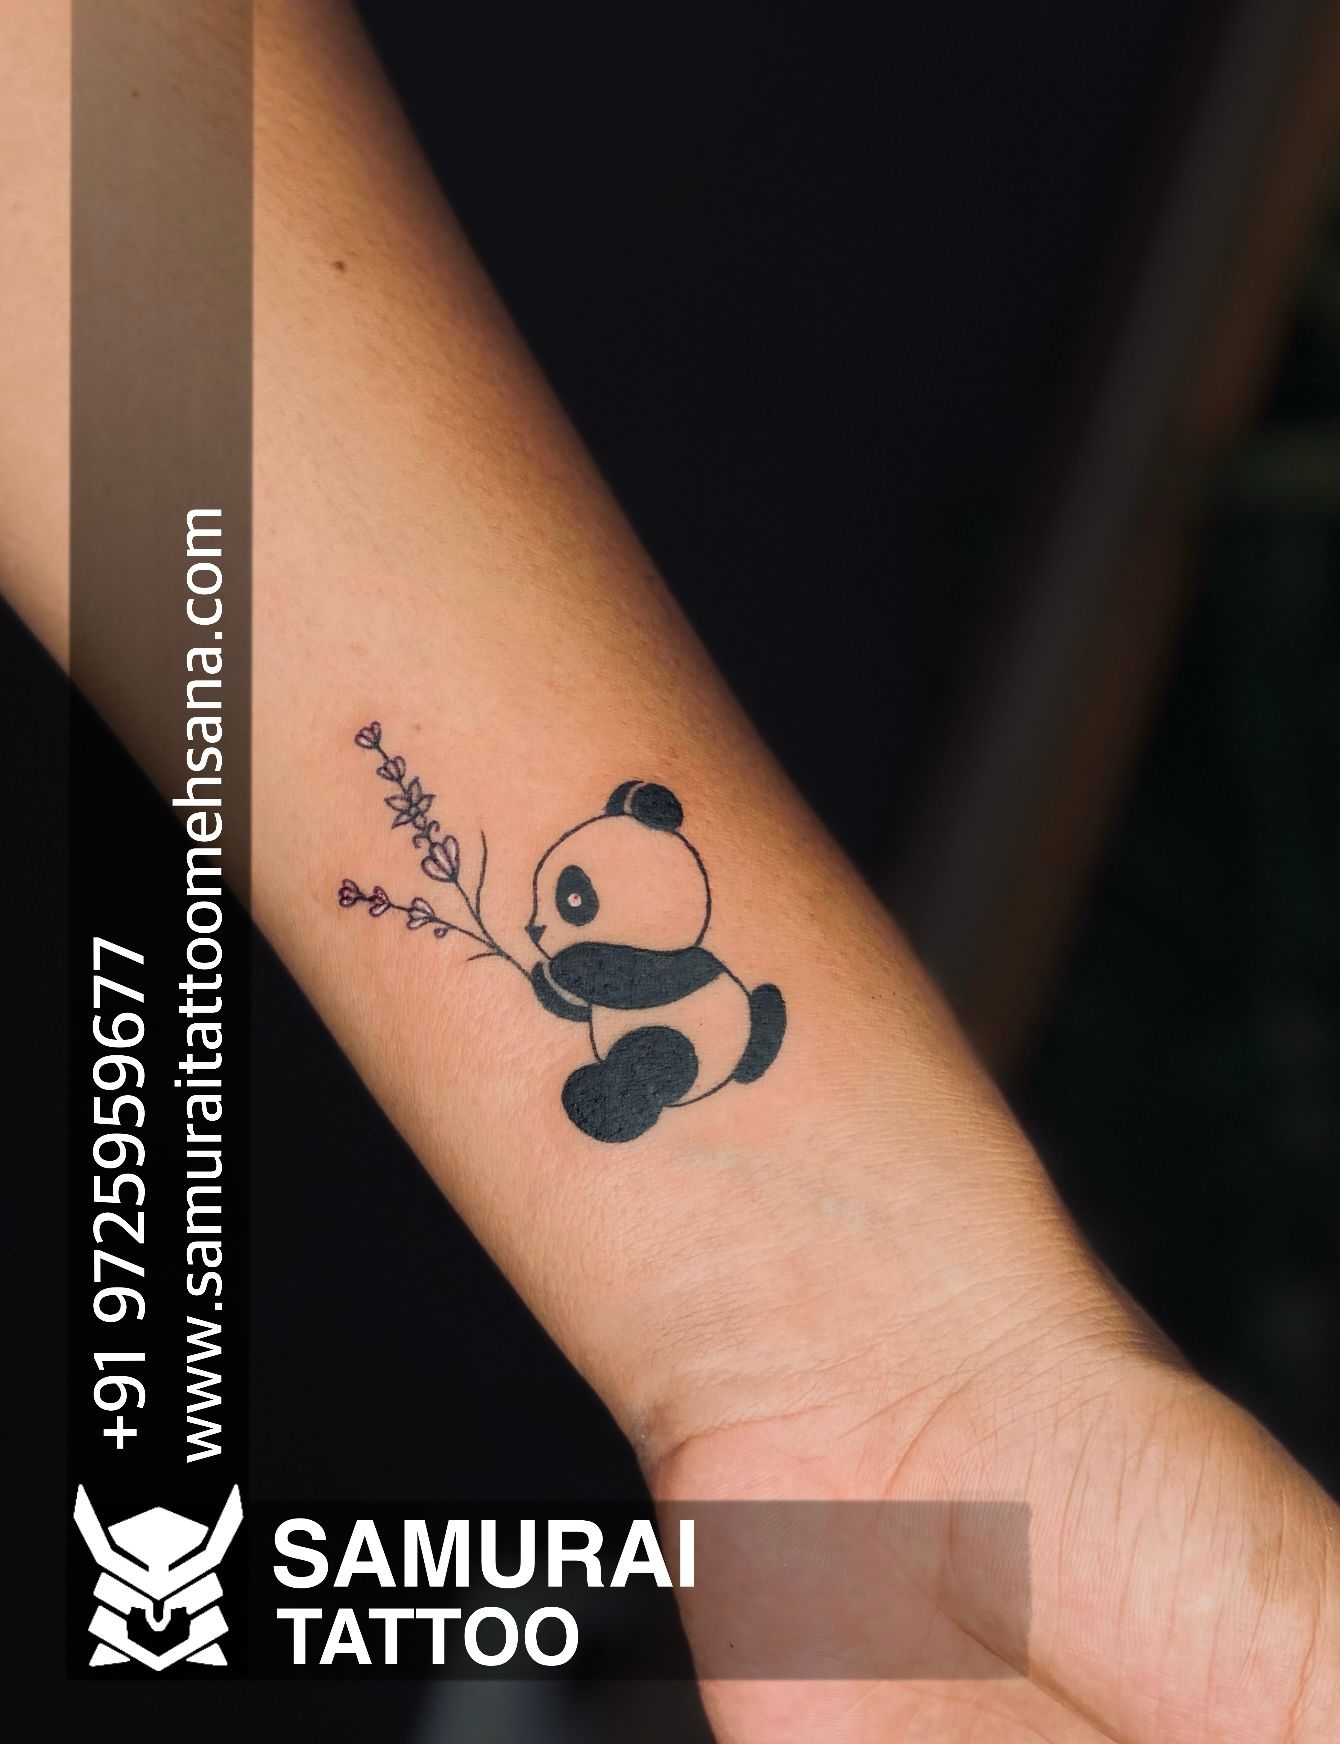 Share 167+ small panda tattoo latest